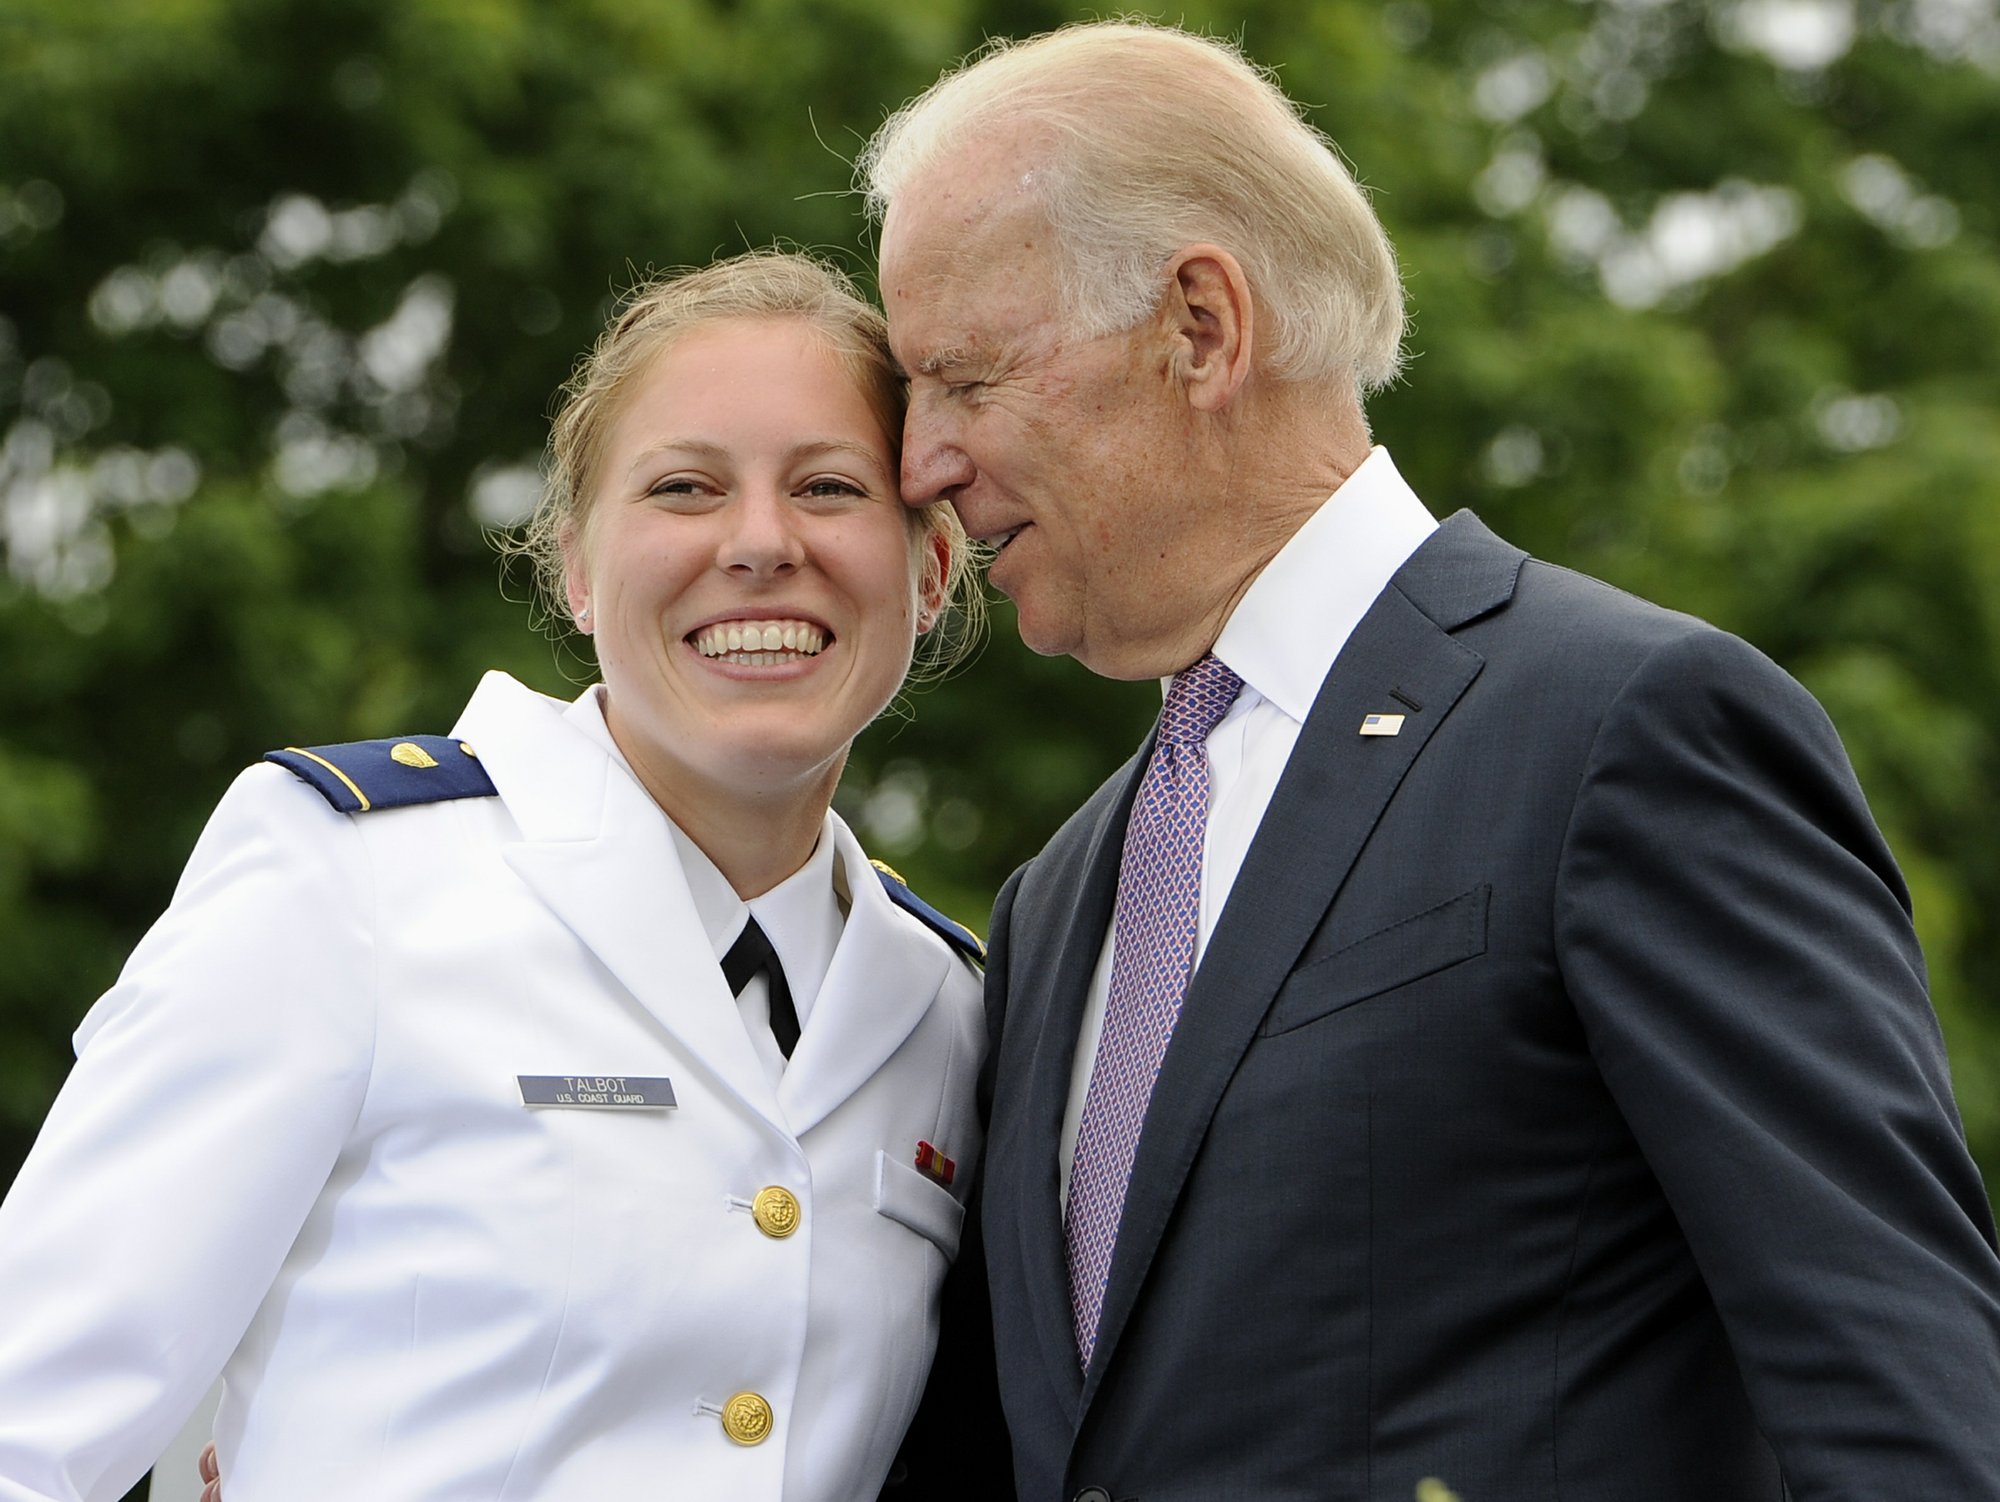 Wedge Polering overholdelse He hugs everybody': Women divided over defense of Biden | AP News